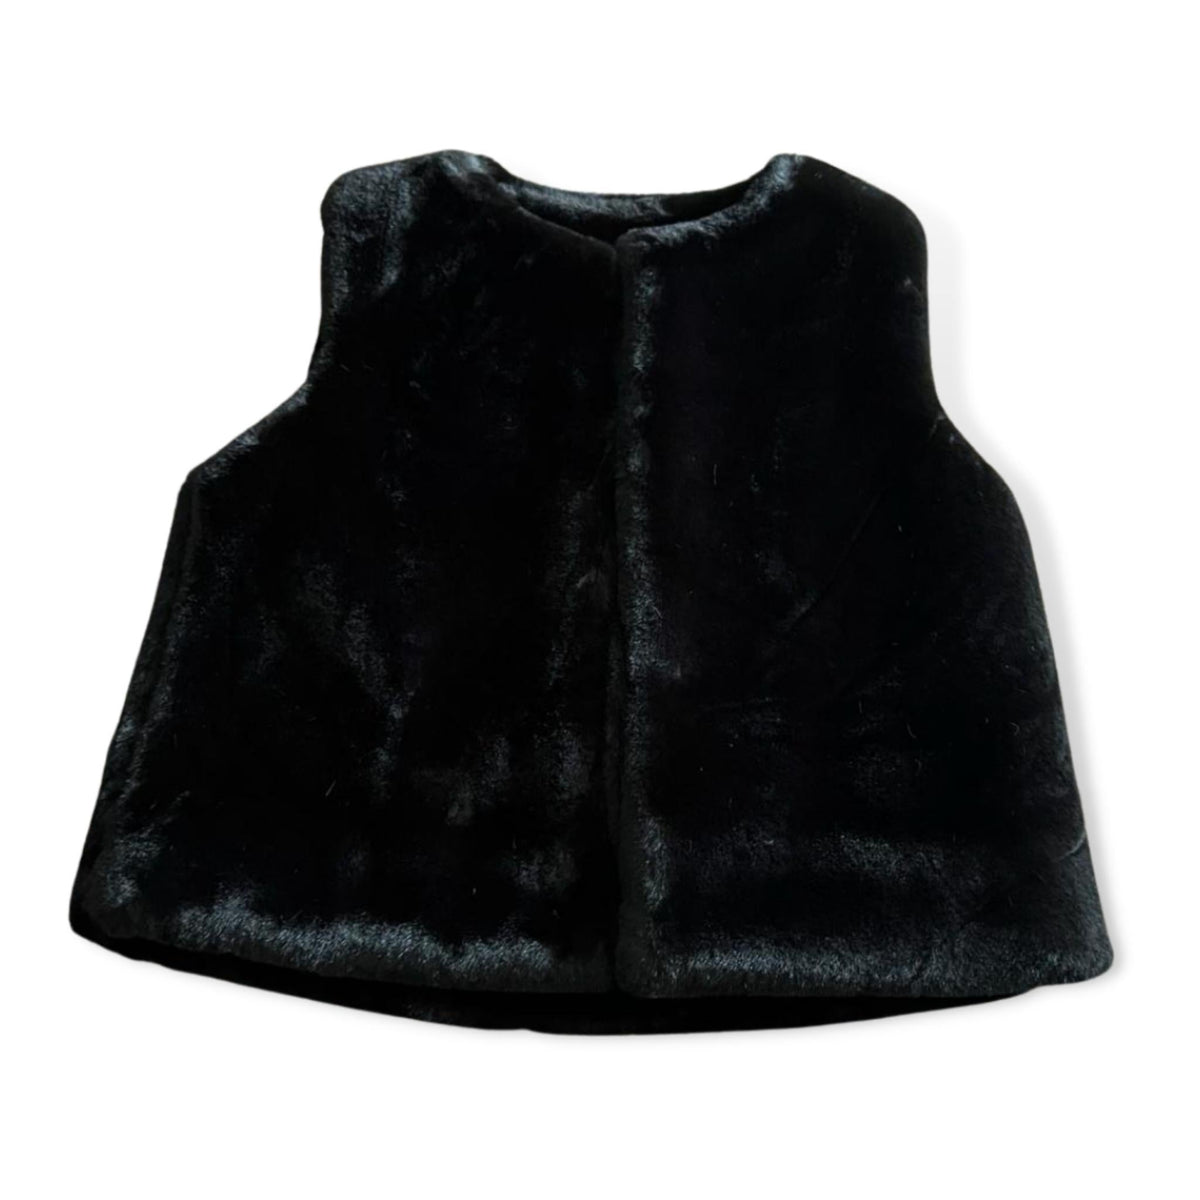 Imoga Black Eva Vest - a Spirit Animal - vest $120-$150 $90-$120 active Sep 2022